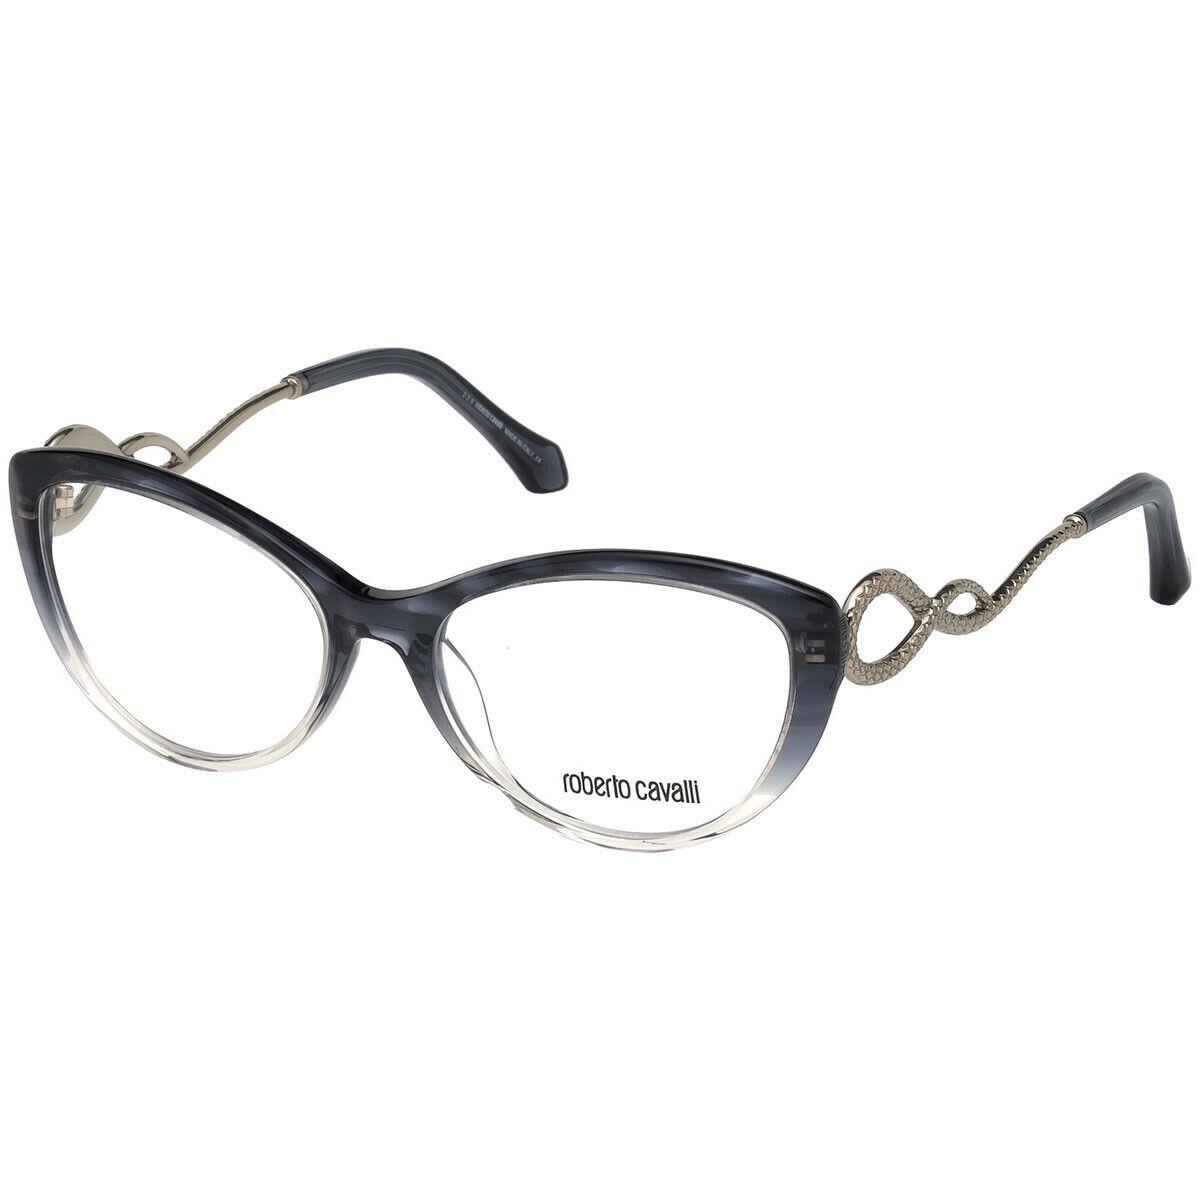 Roberto Cavalli Argentario RC 5009 Blue Grey Eyeglasses Frame 54-16-140 Cat Eye